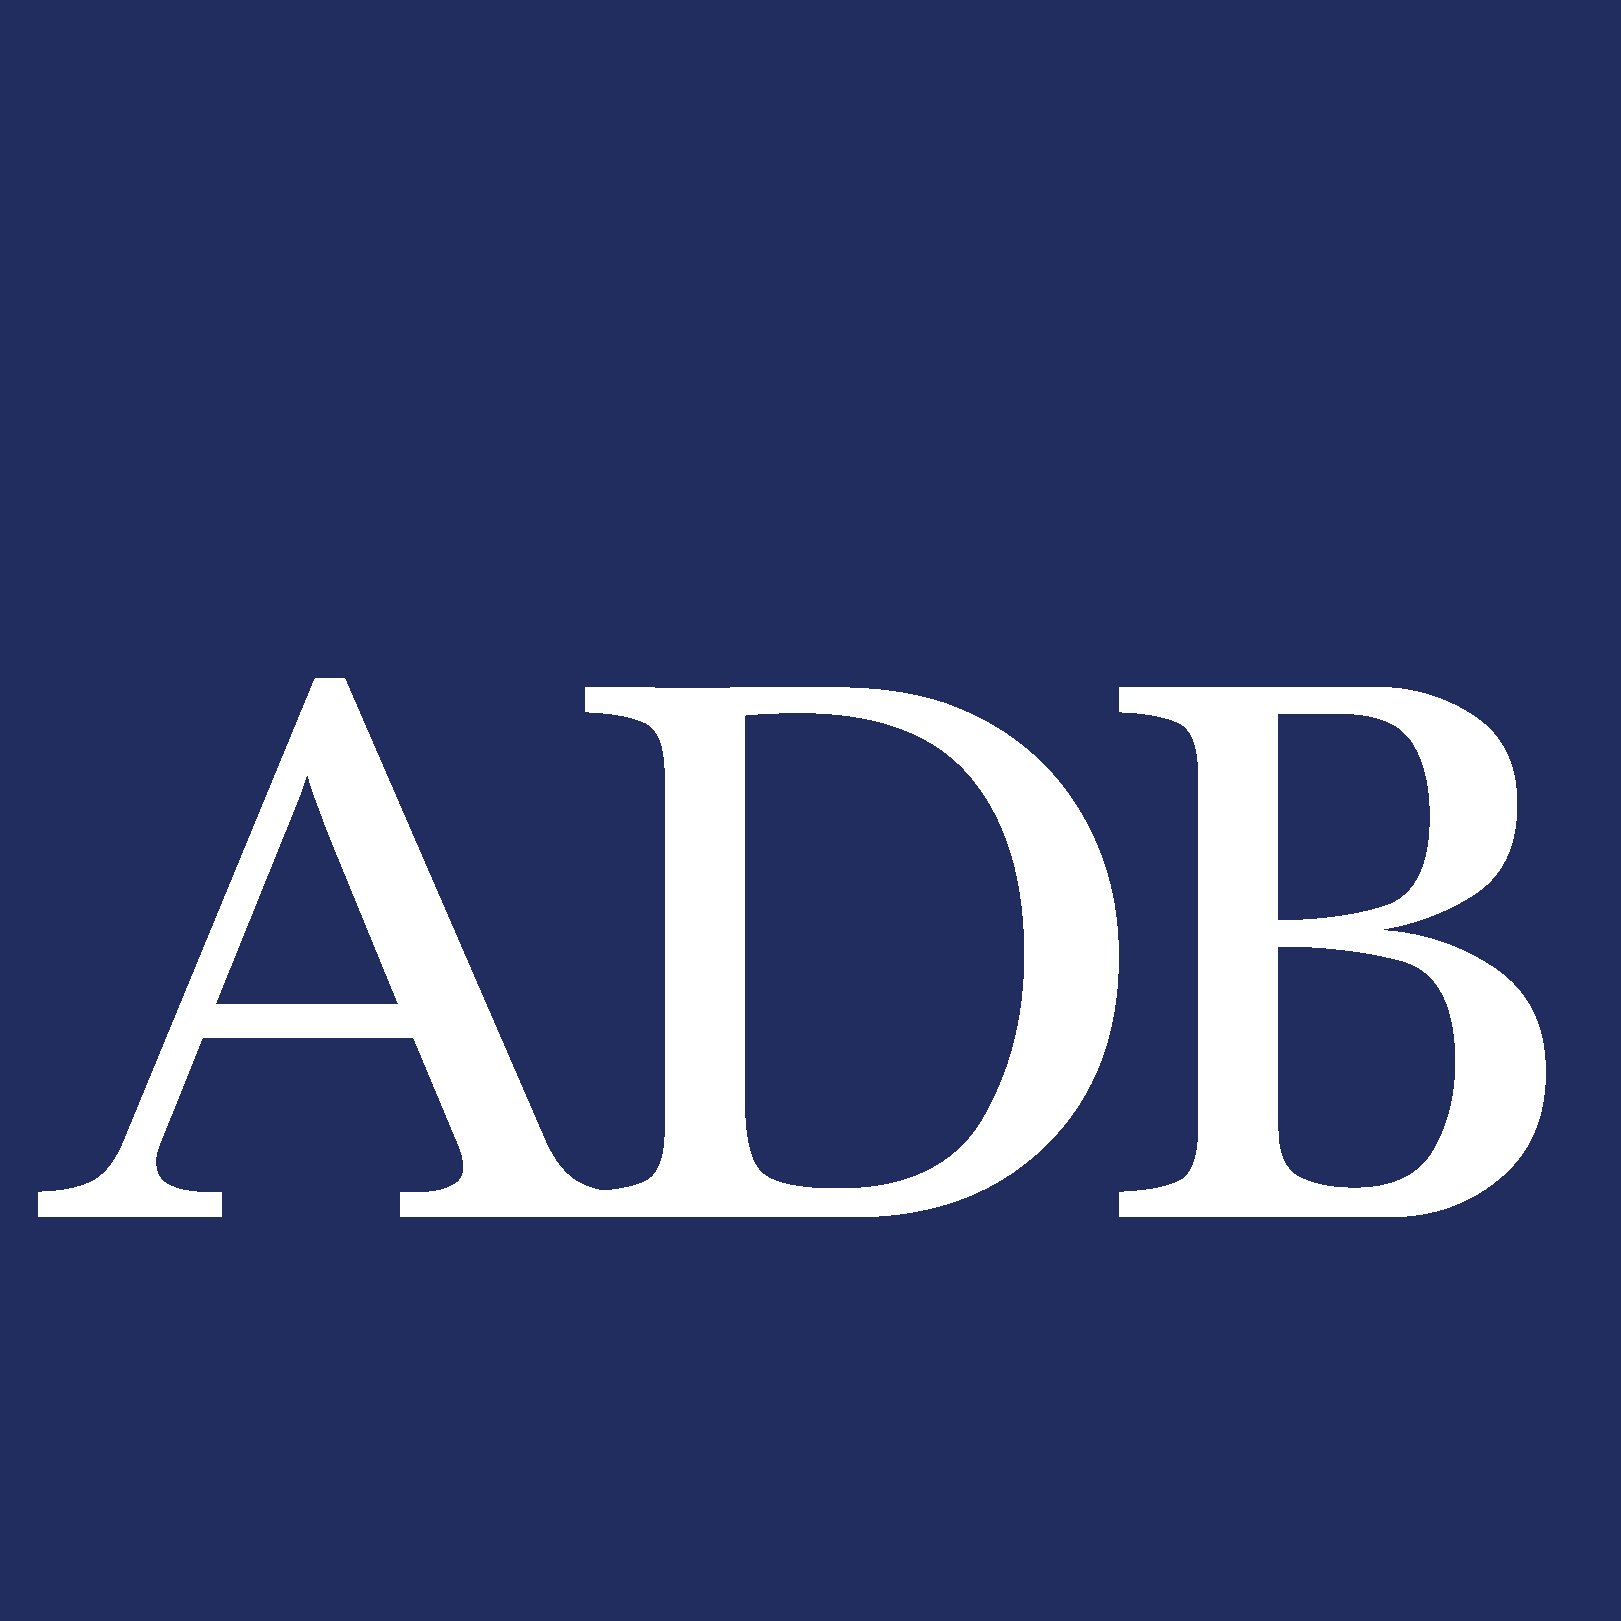 ADB - Asian Development Bank Logo